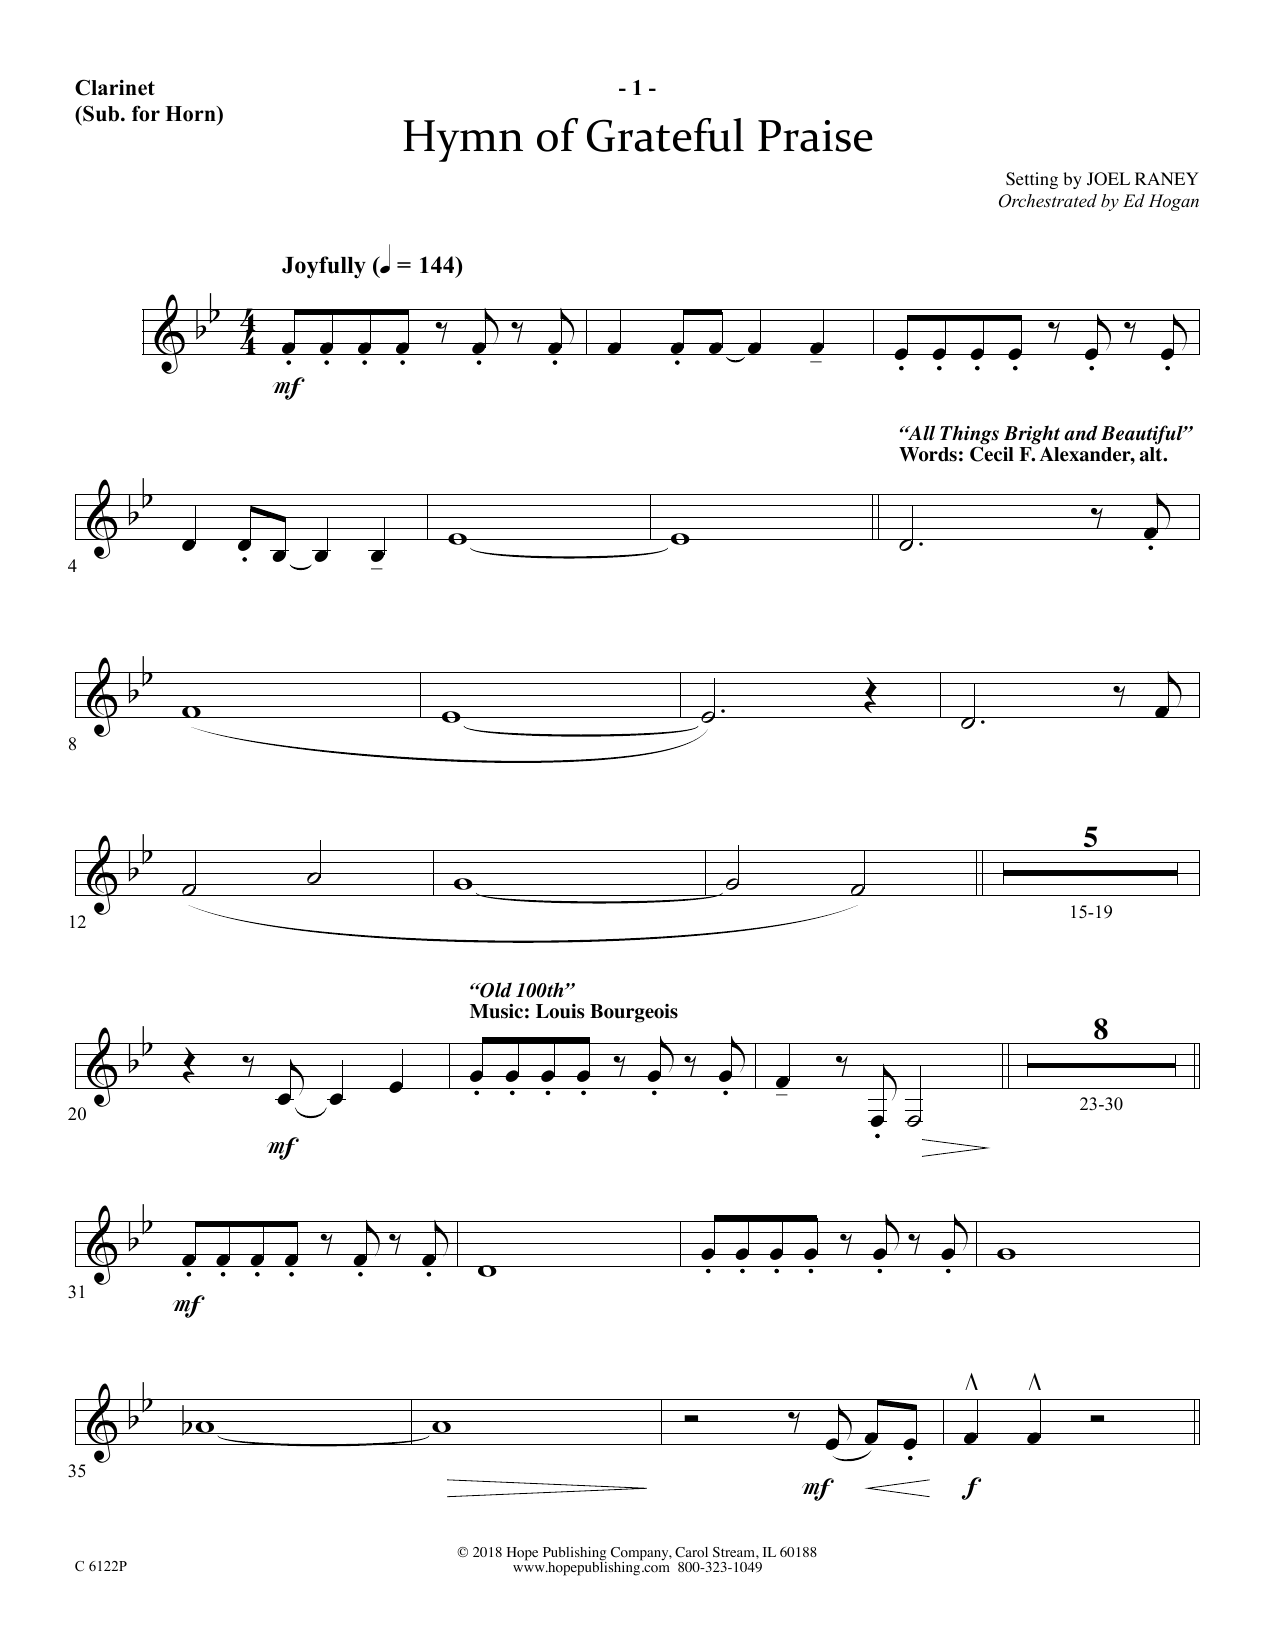 Joel Raney Hymn Of Grateful Praise - Clarinet (sub. Horn) Sheet Music Notes & Chords for Choir Instrumental Pak - Download or Print PDF